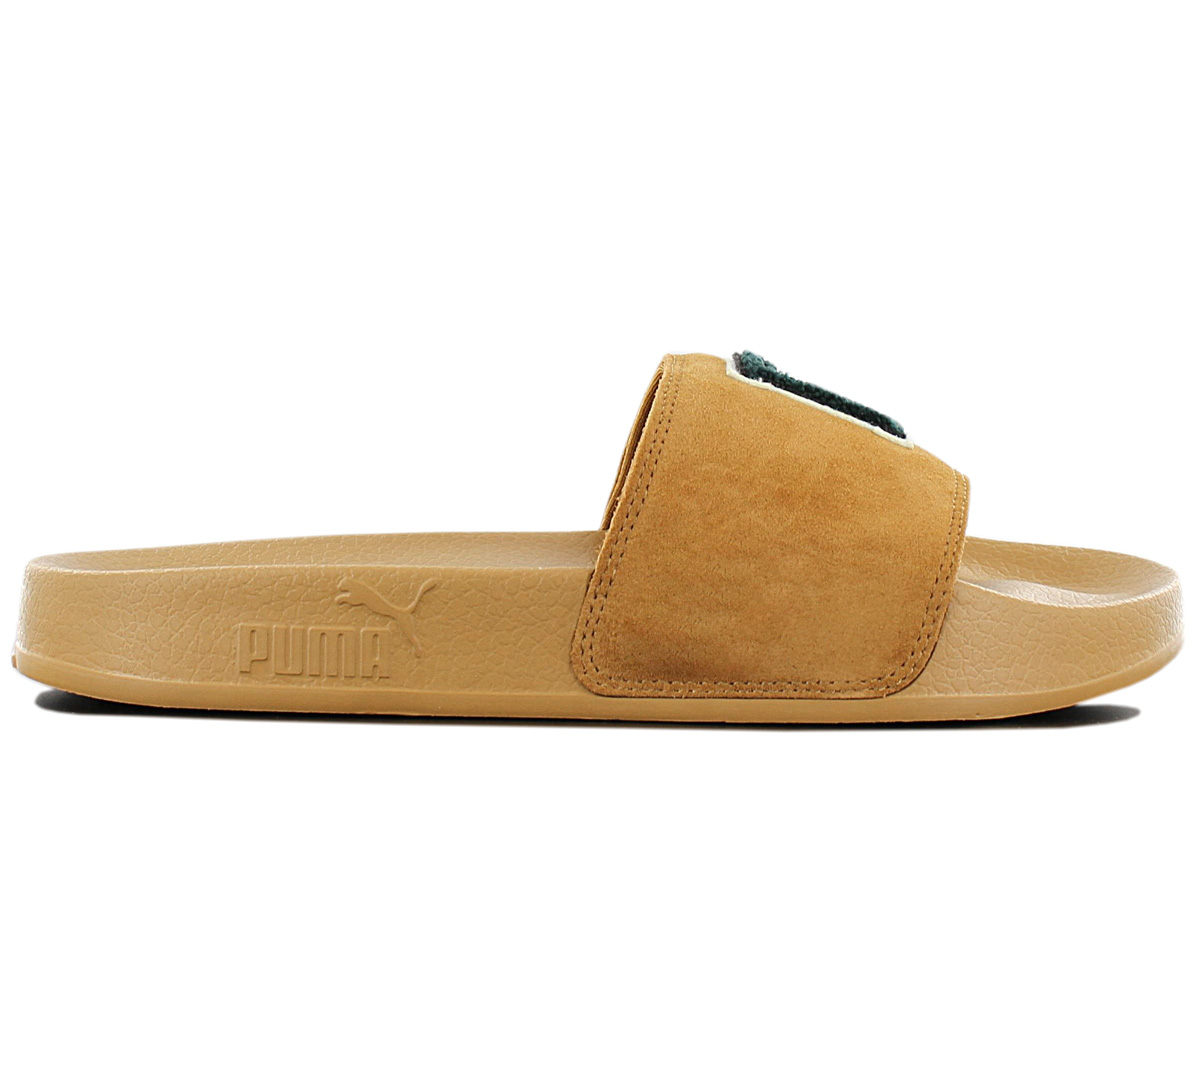 puma brown slippers